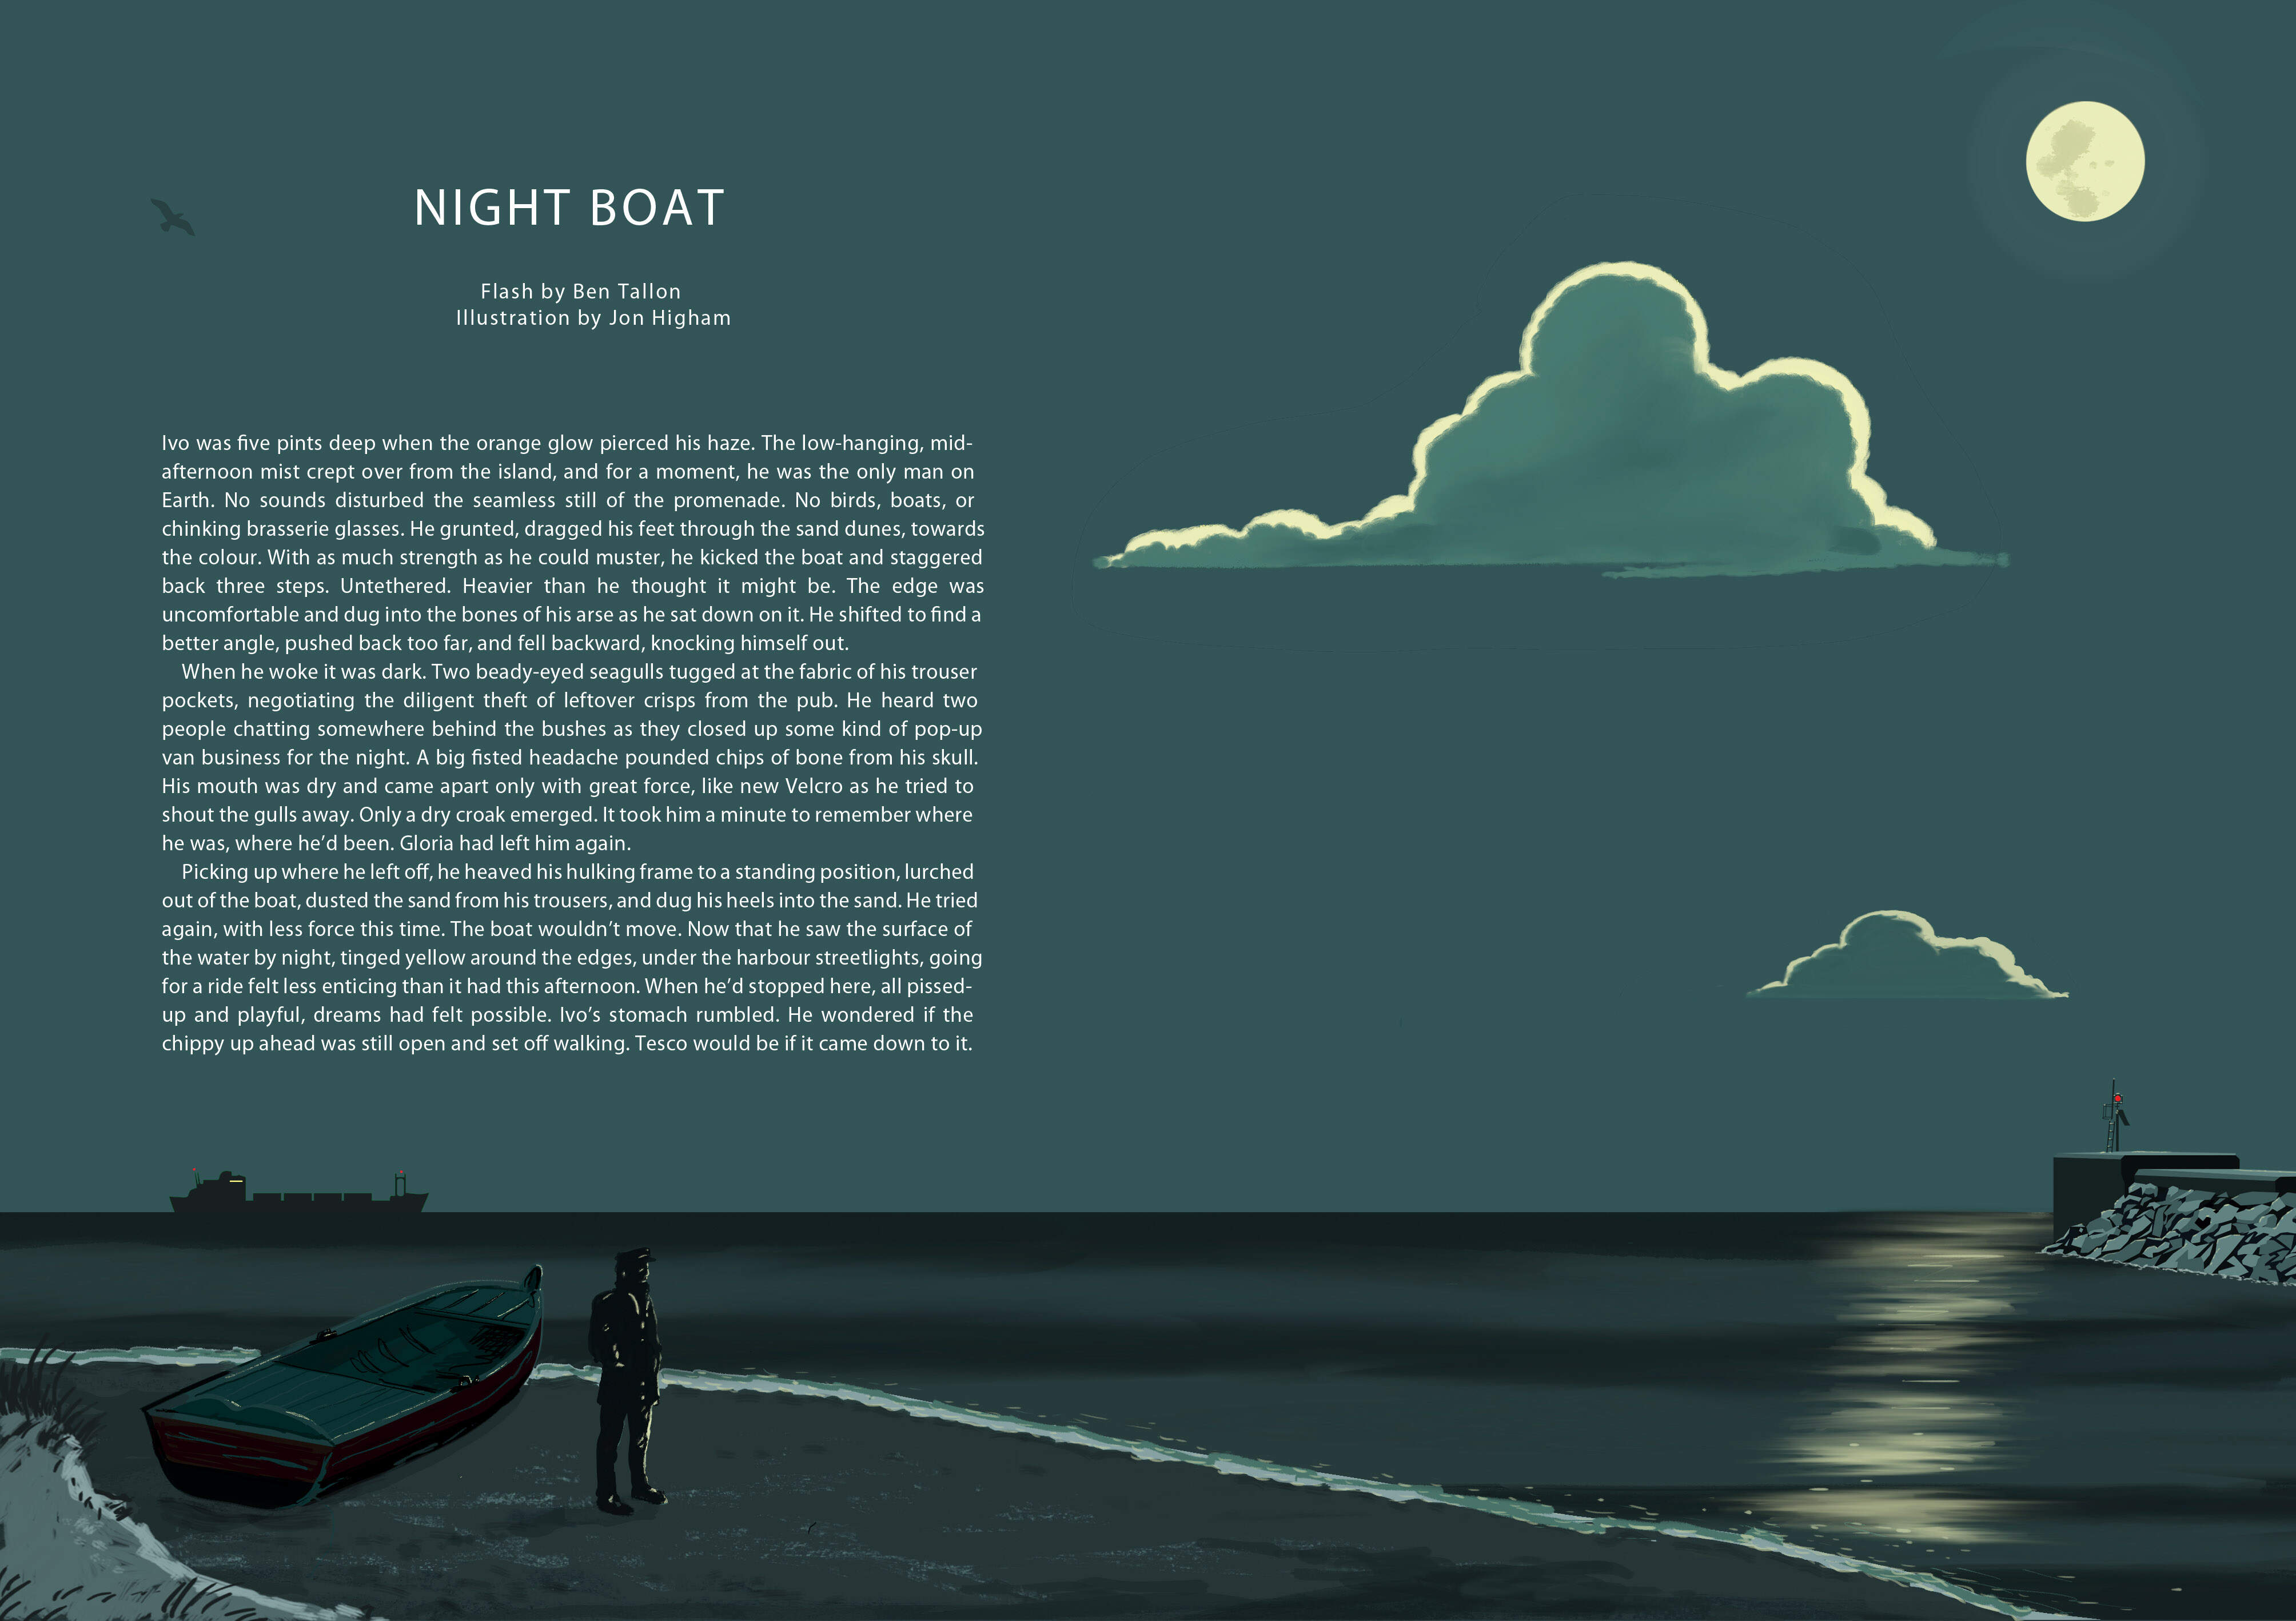 Night Boat From Popshot Magazine issue #35